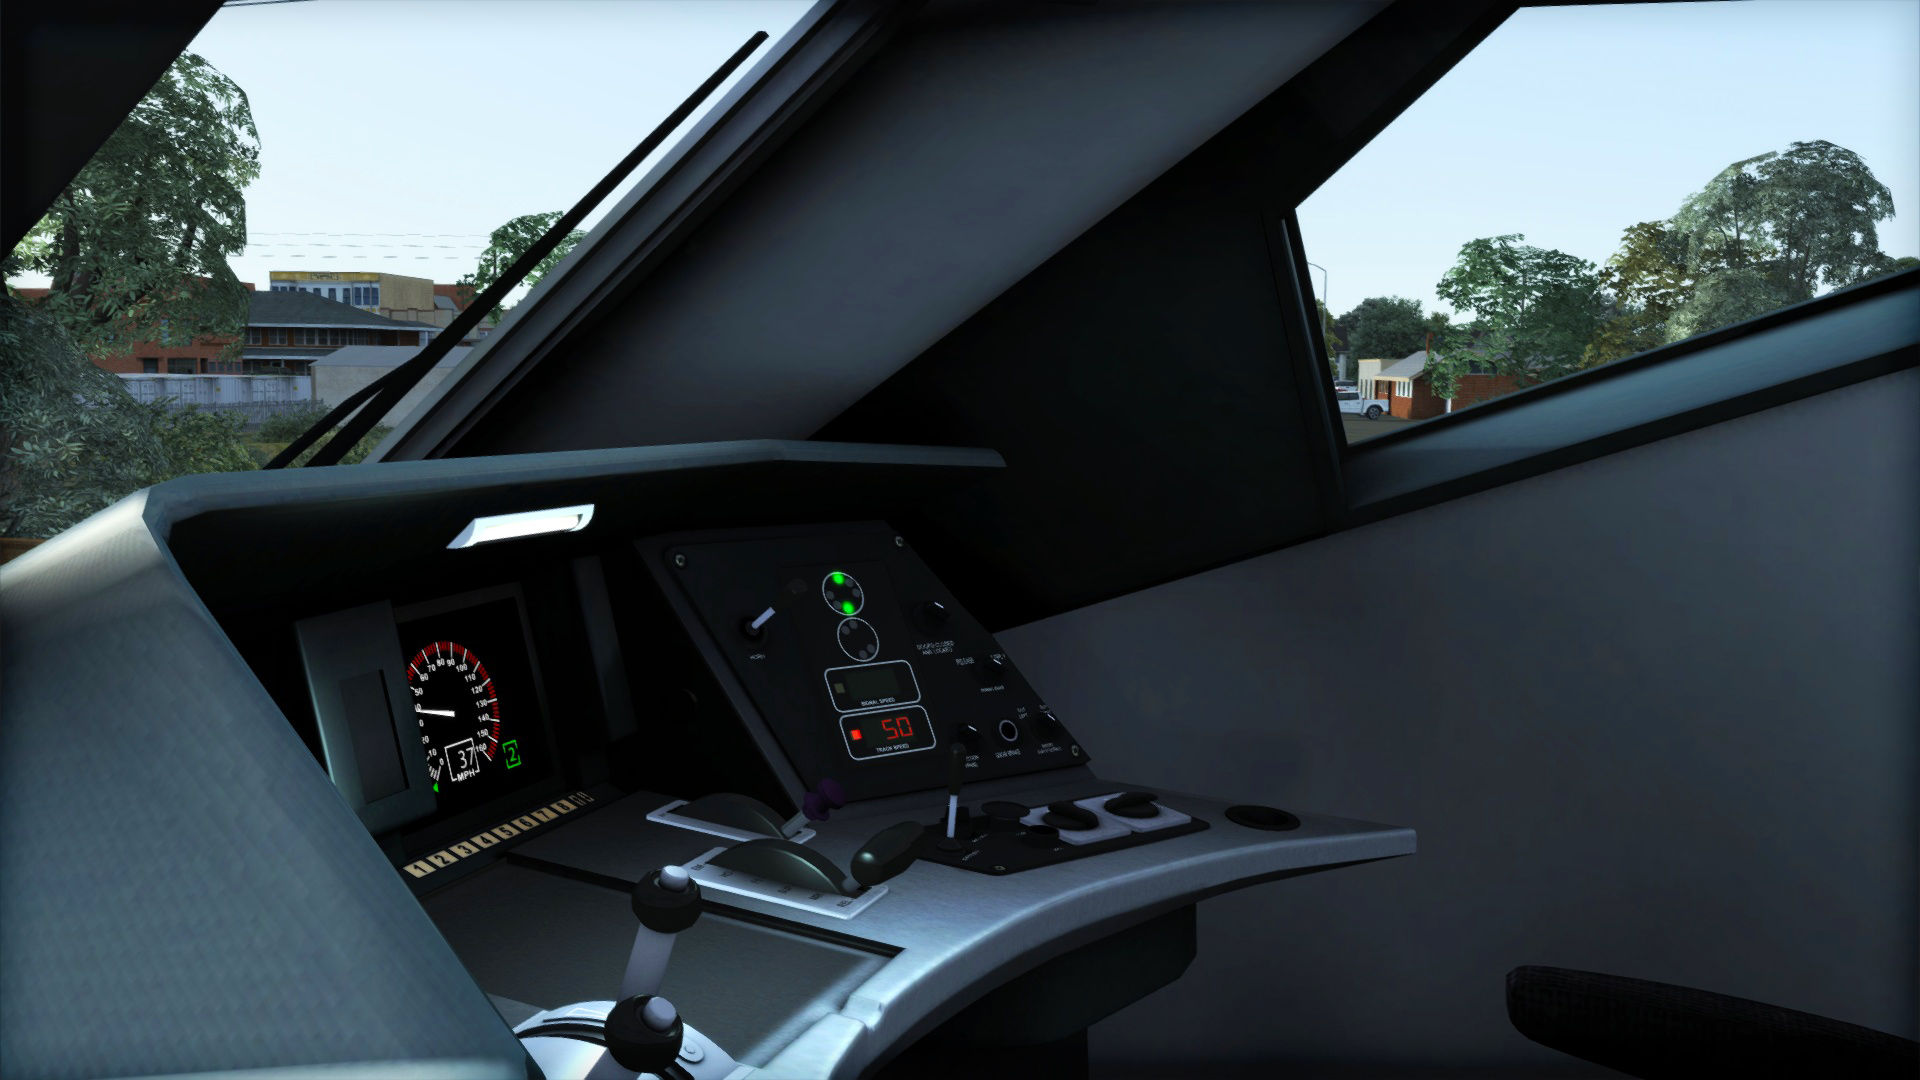 Train Simulator: Amtrak HHP-8 Loco Add-On screenshot